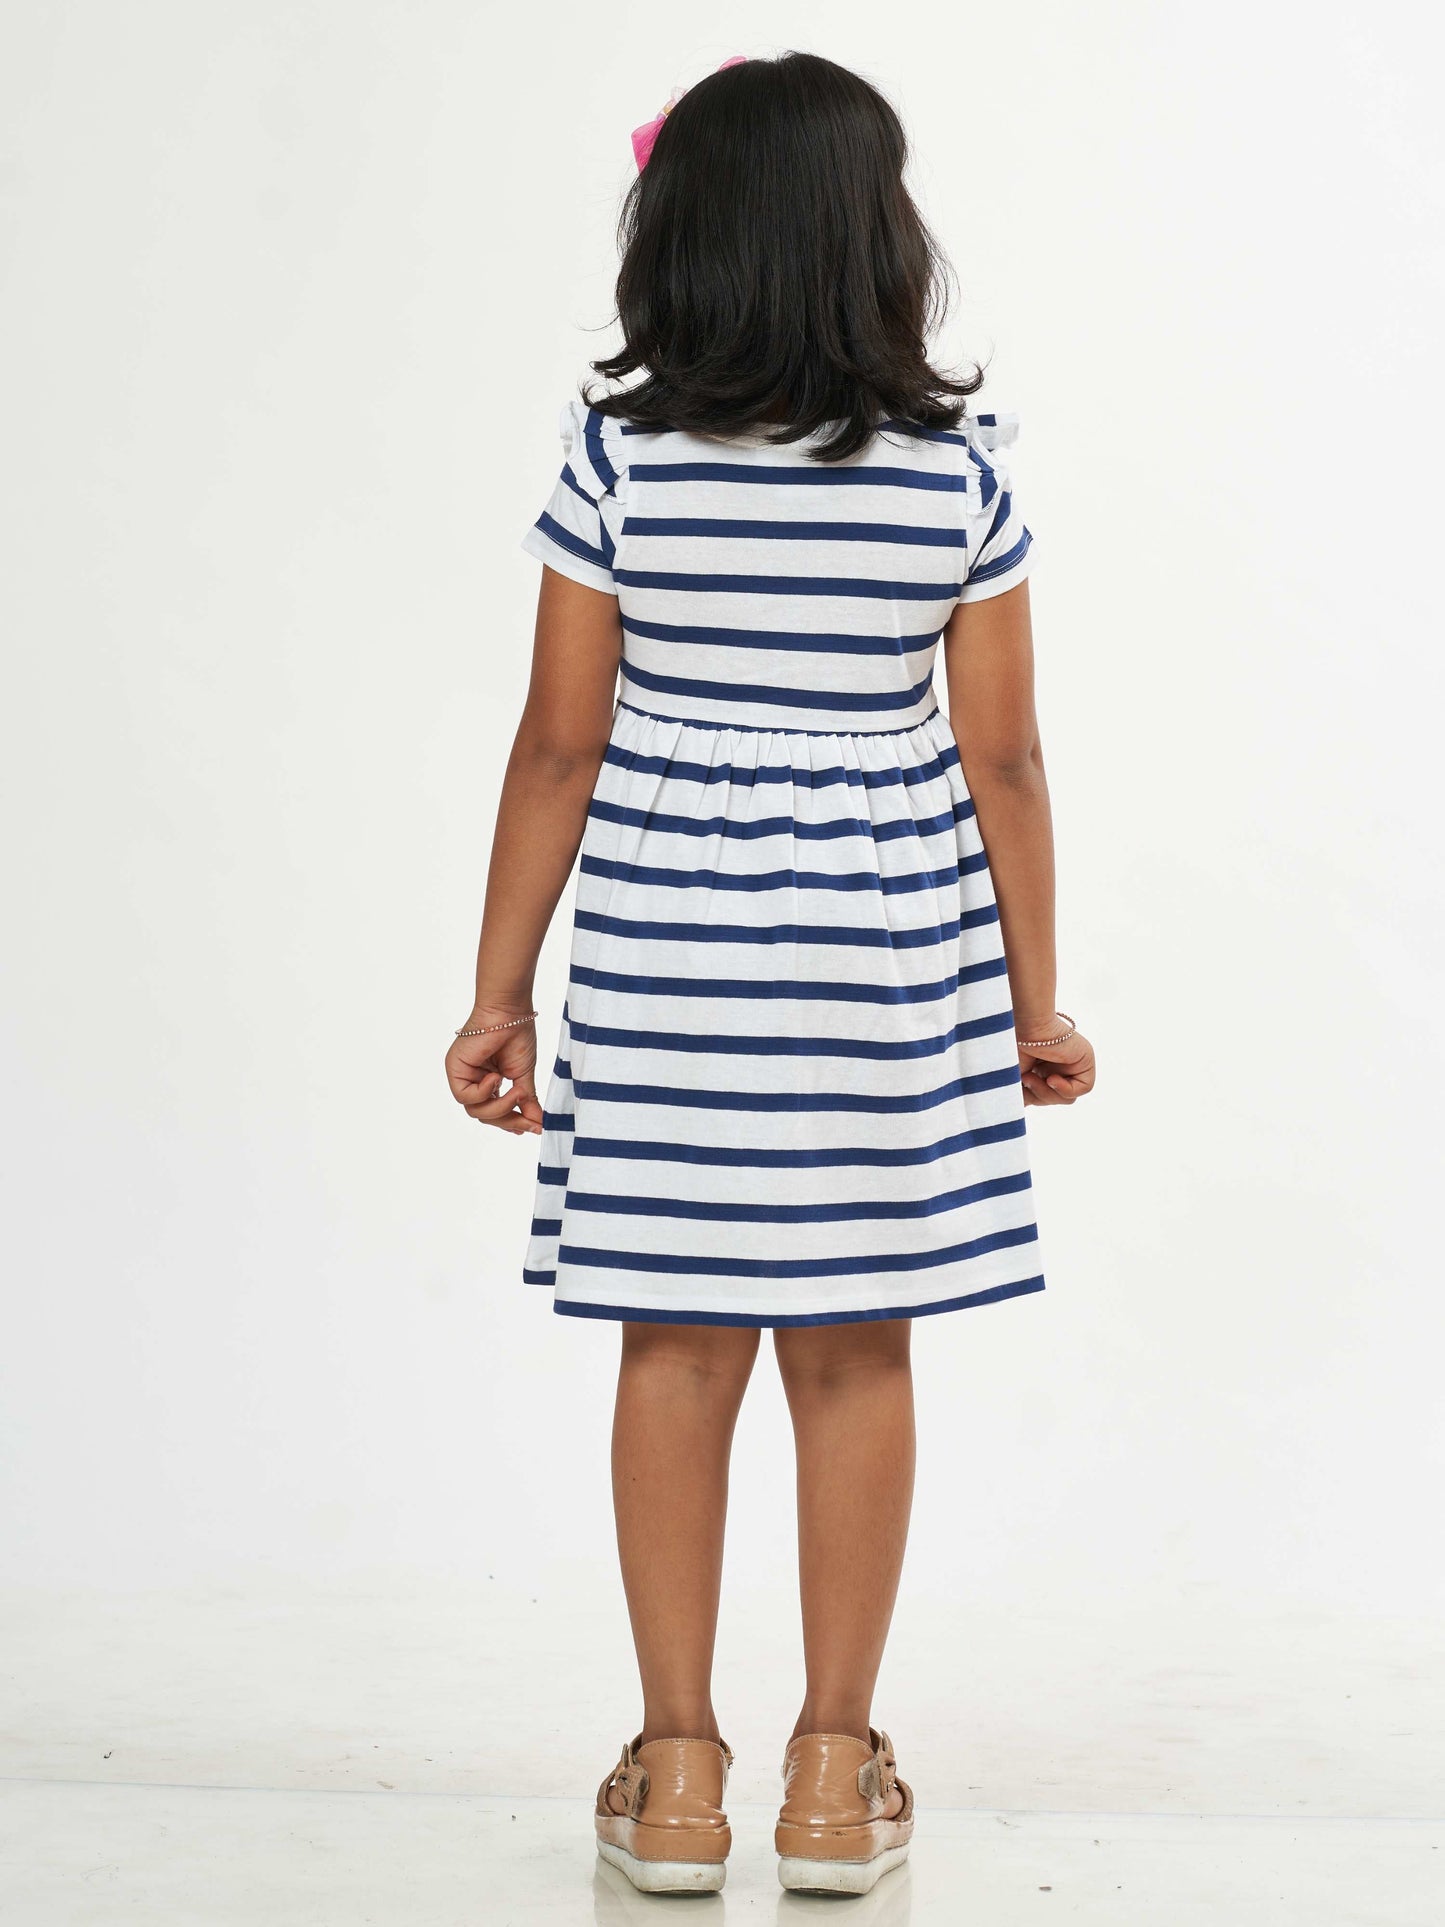 Joyful Girls Premium Cotton Frocks - Blue Stripes